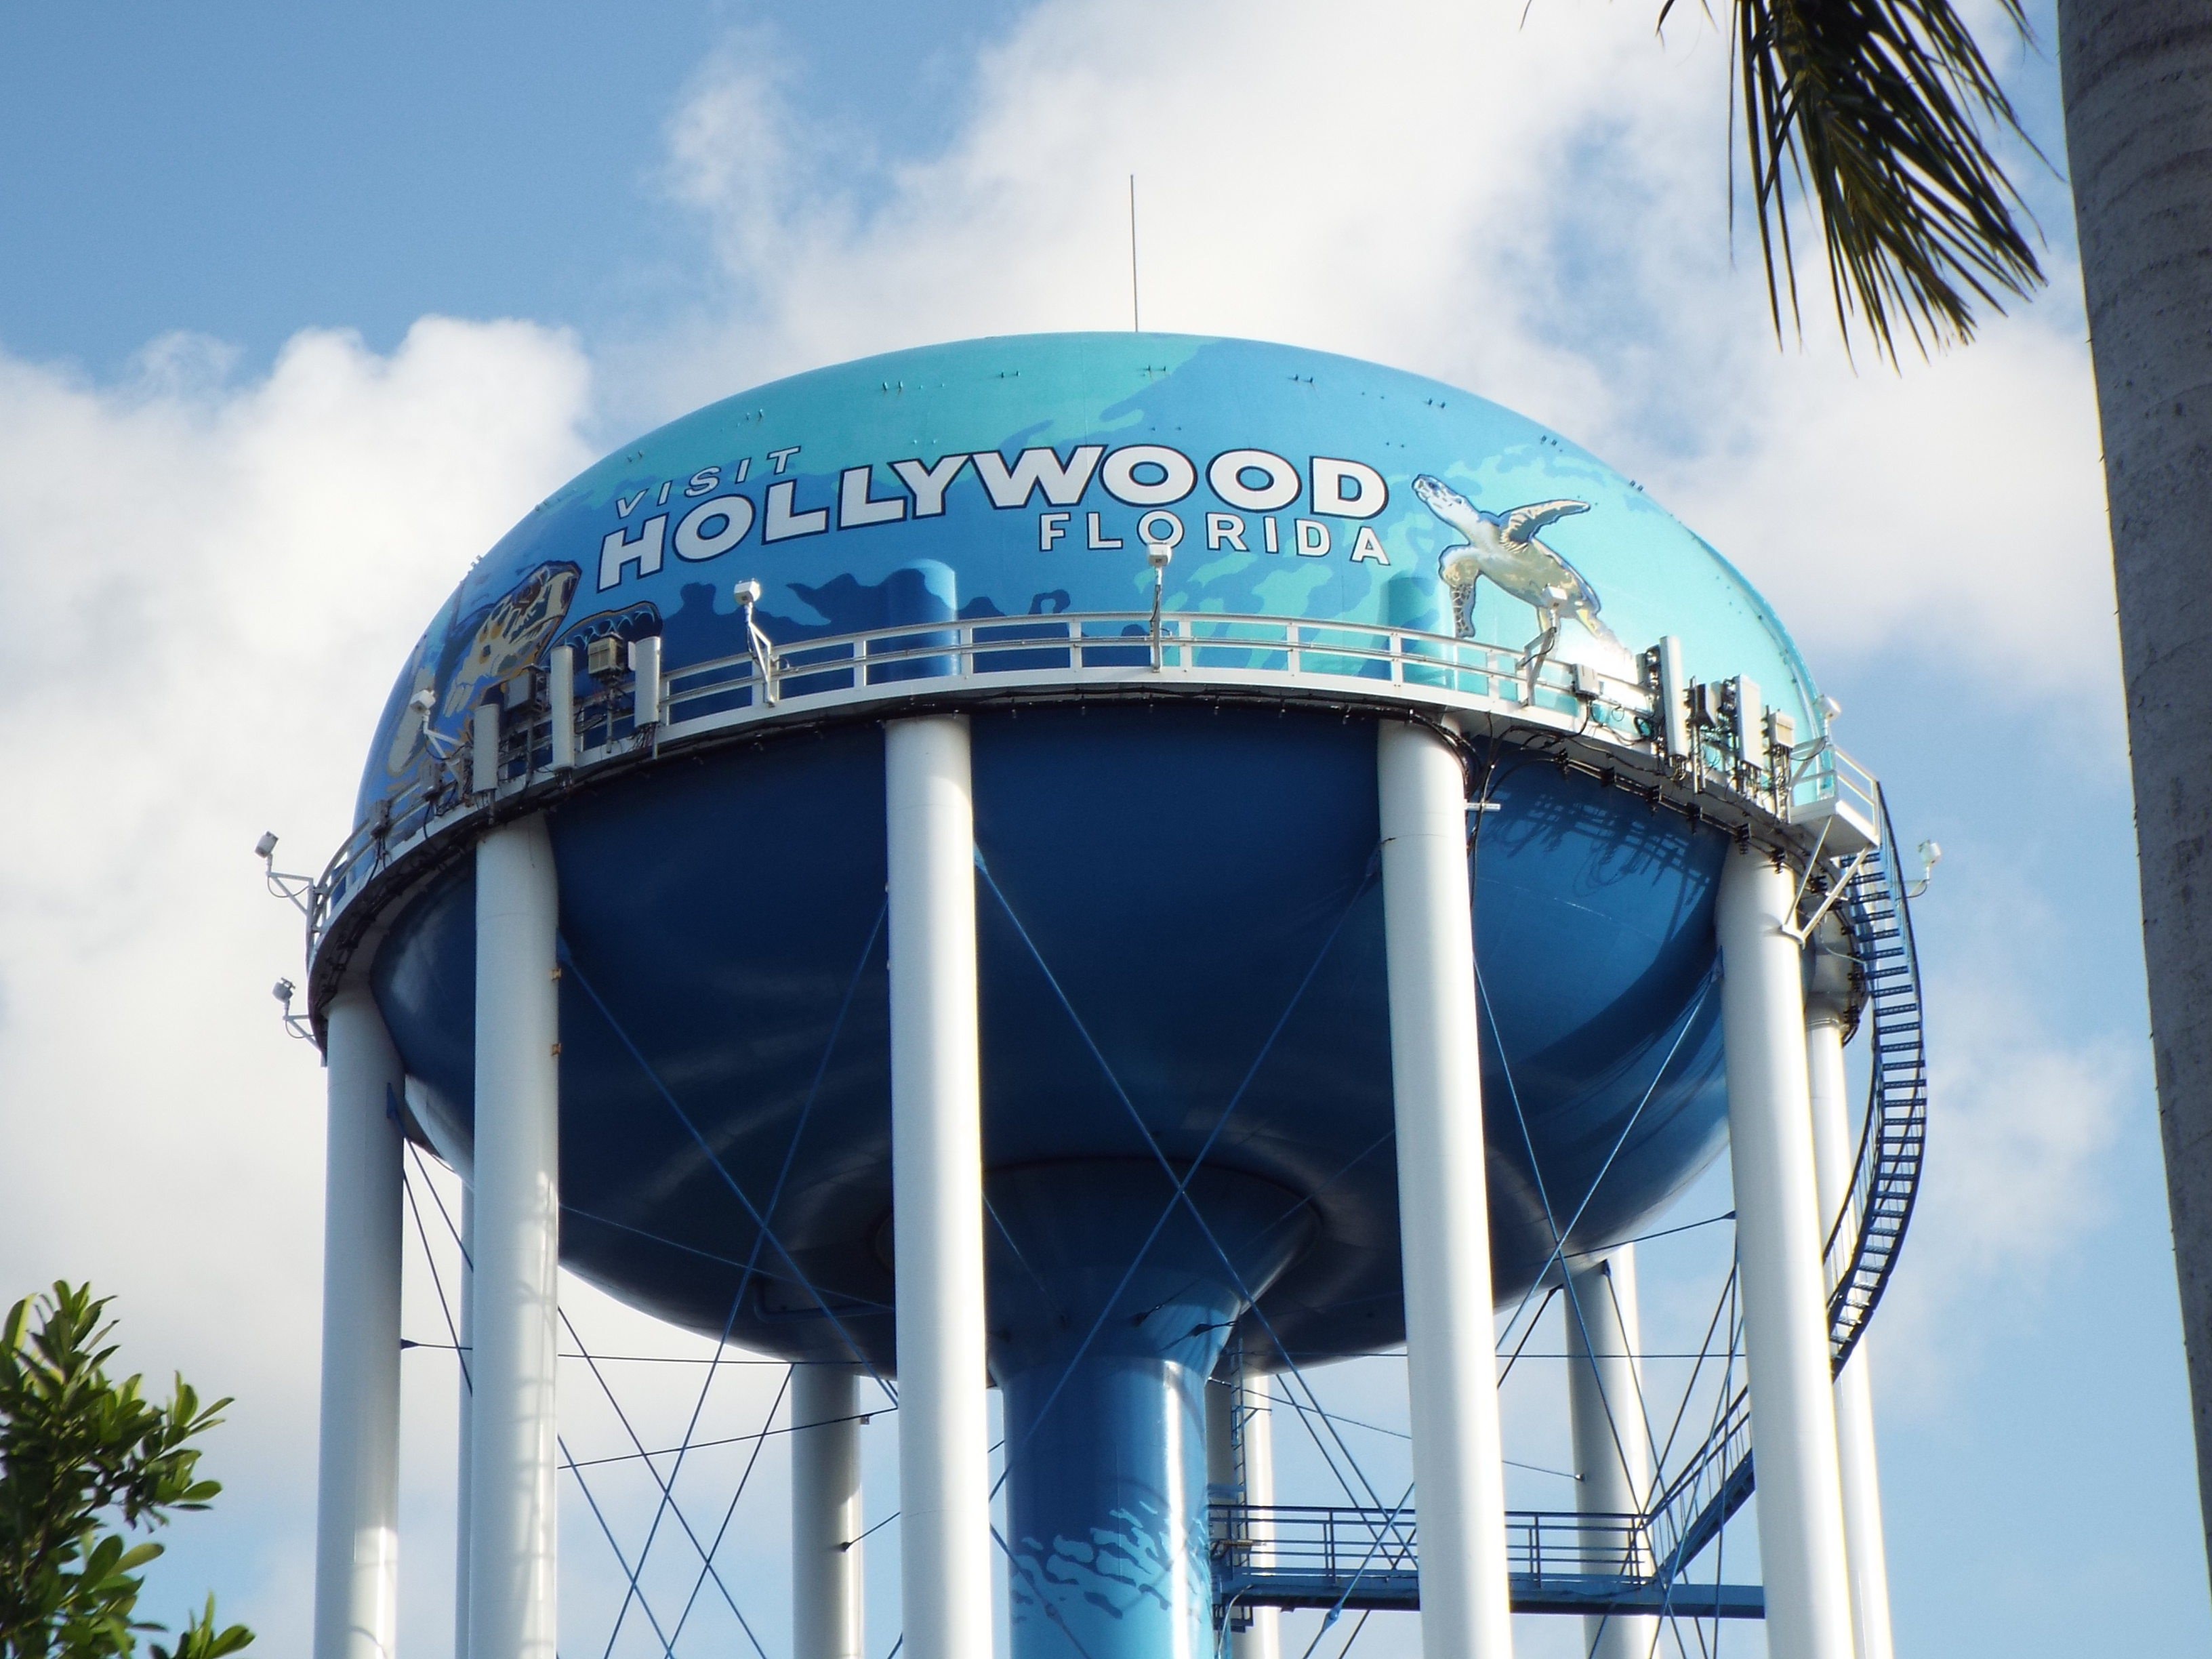 Hollywood Florida